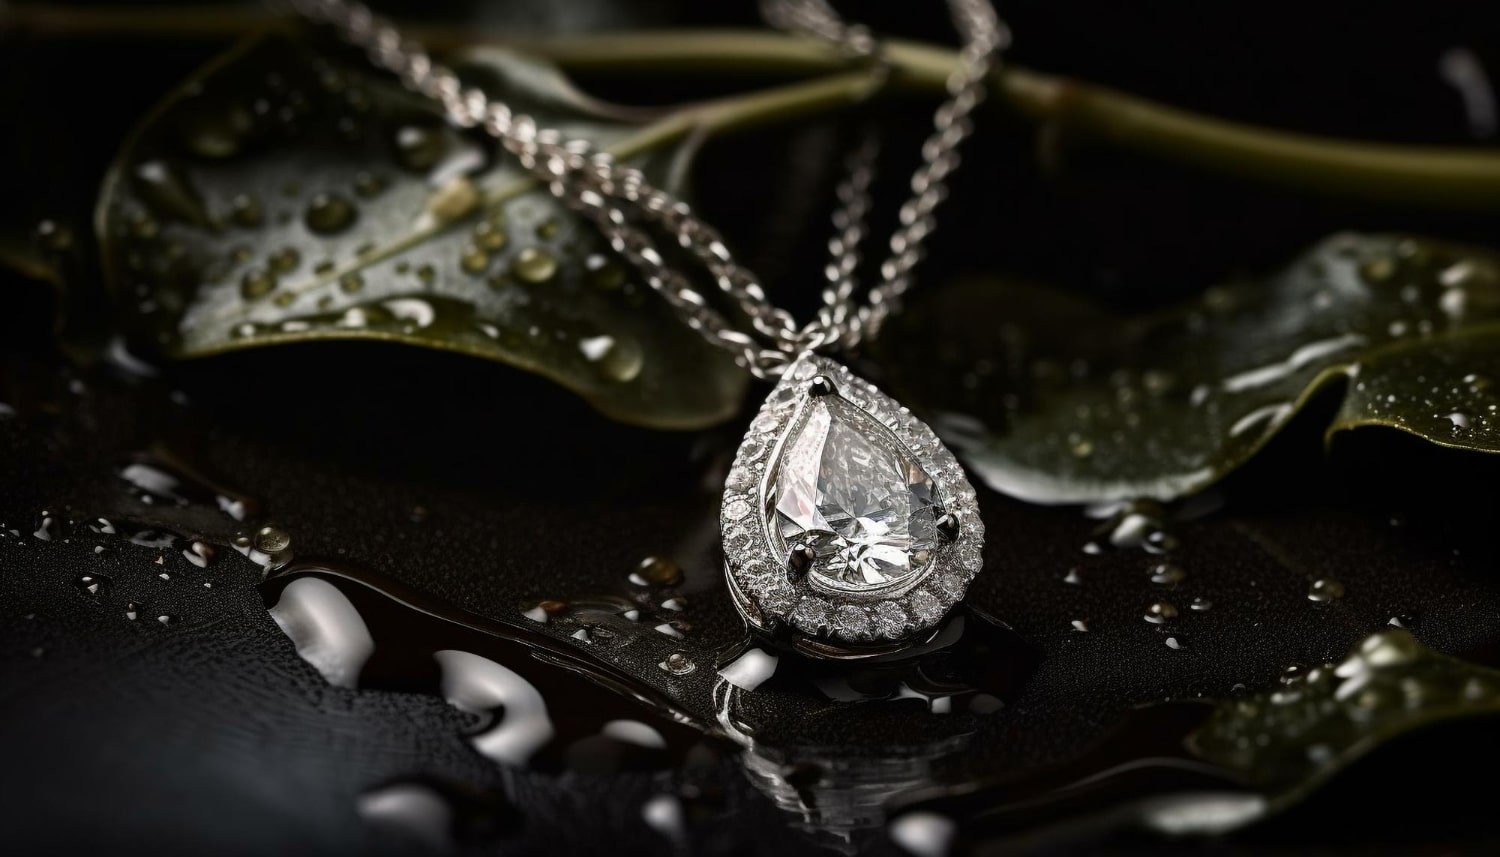 Swarovski Sparkling Crystal Jewelry and Decor Guide